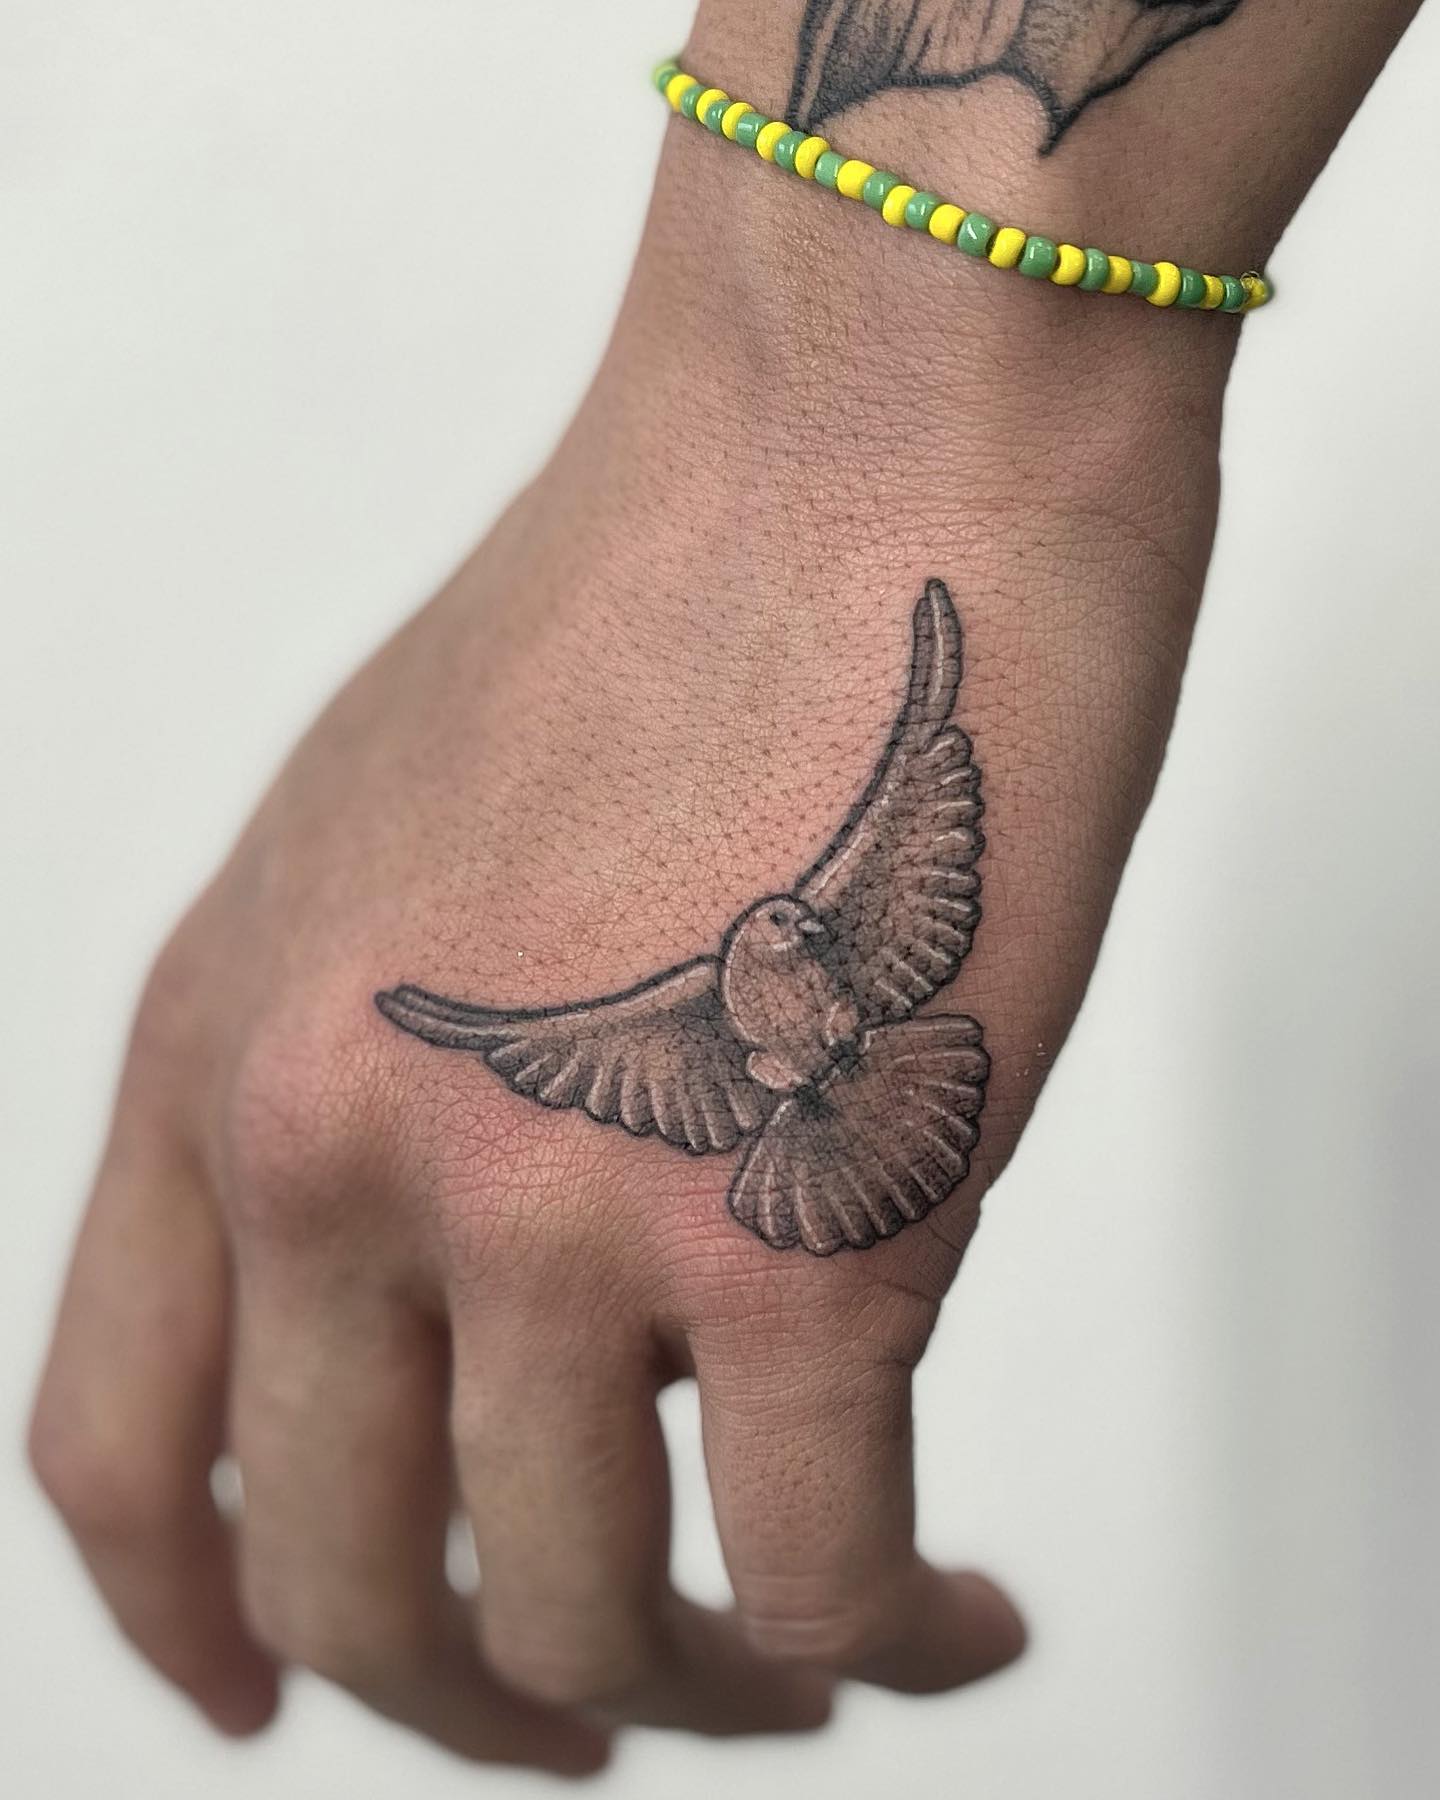 Tatuaje de paloma y palmera divertido